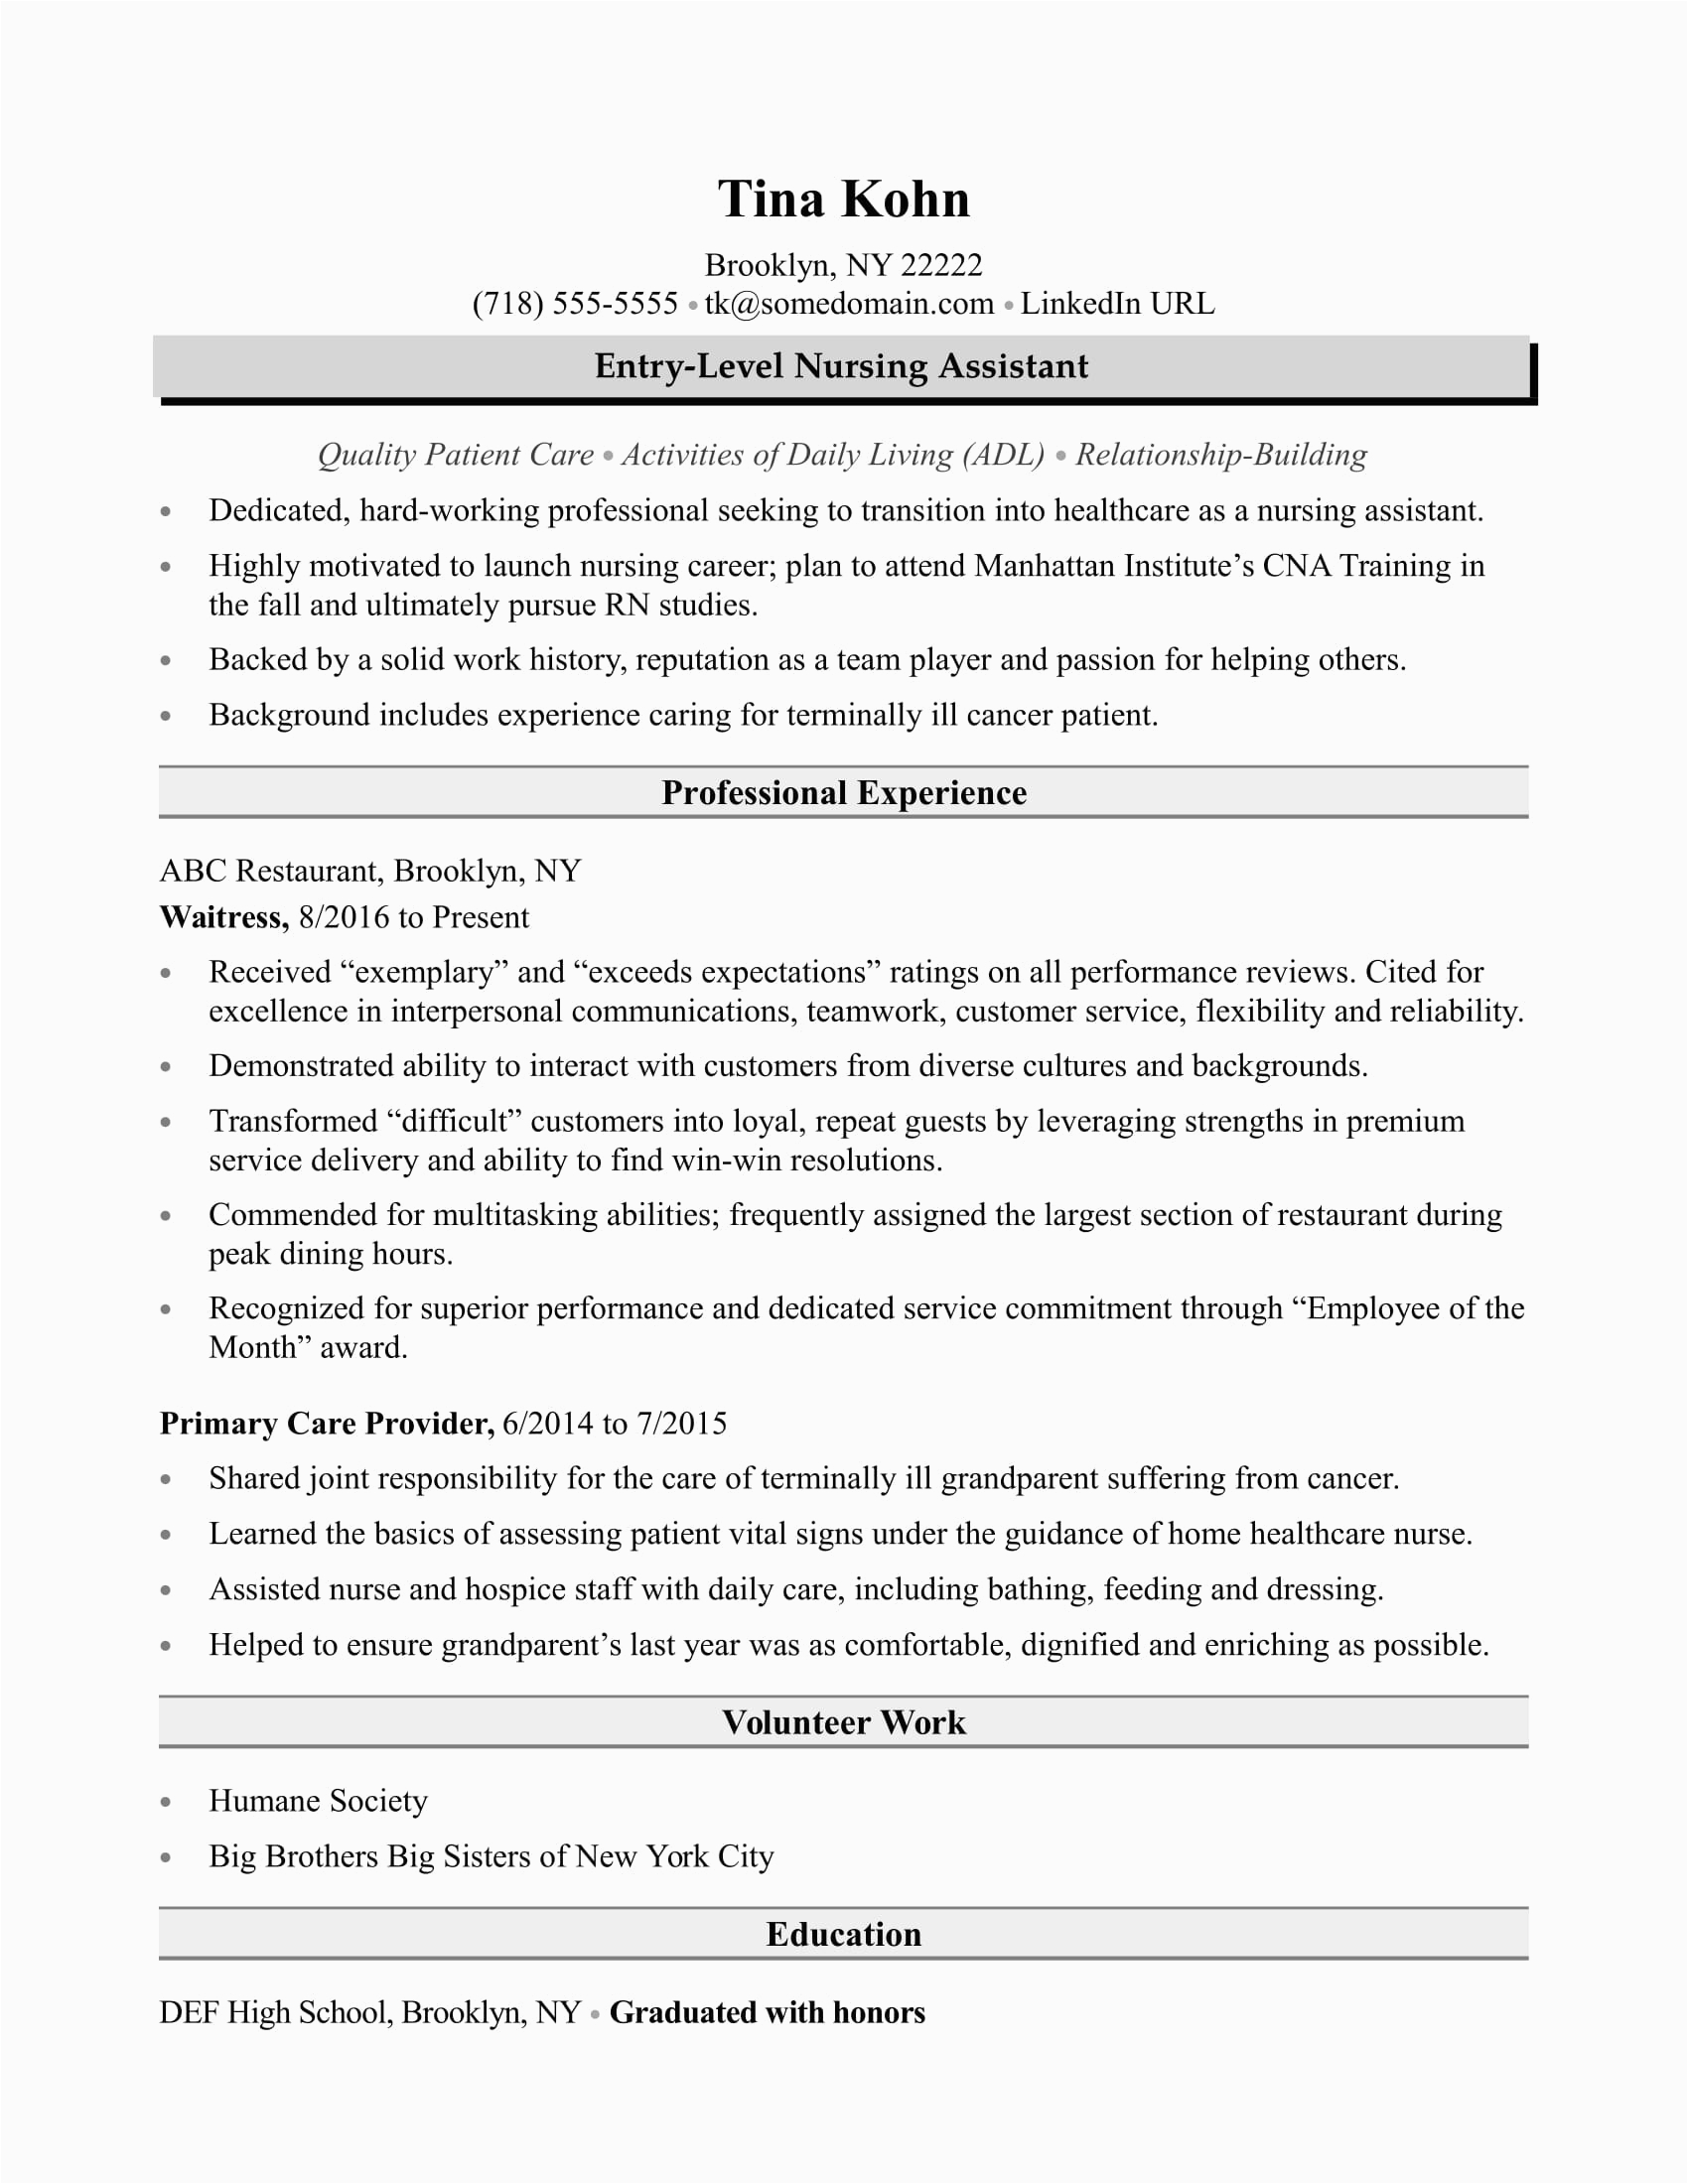 Sample Resume for Entry Level Certified Nursing assistant Nursing assistant Resume Sample